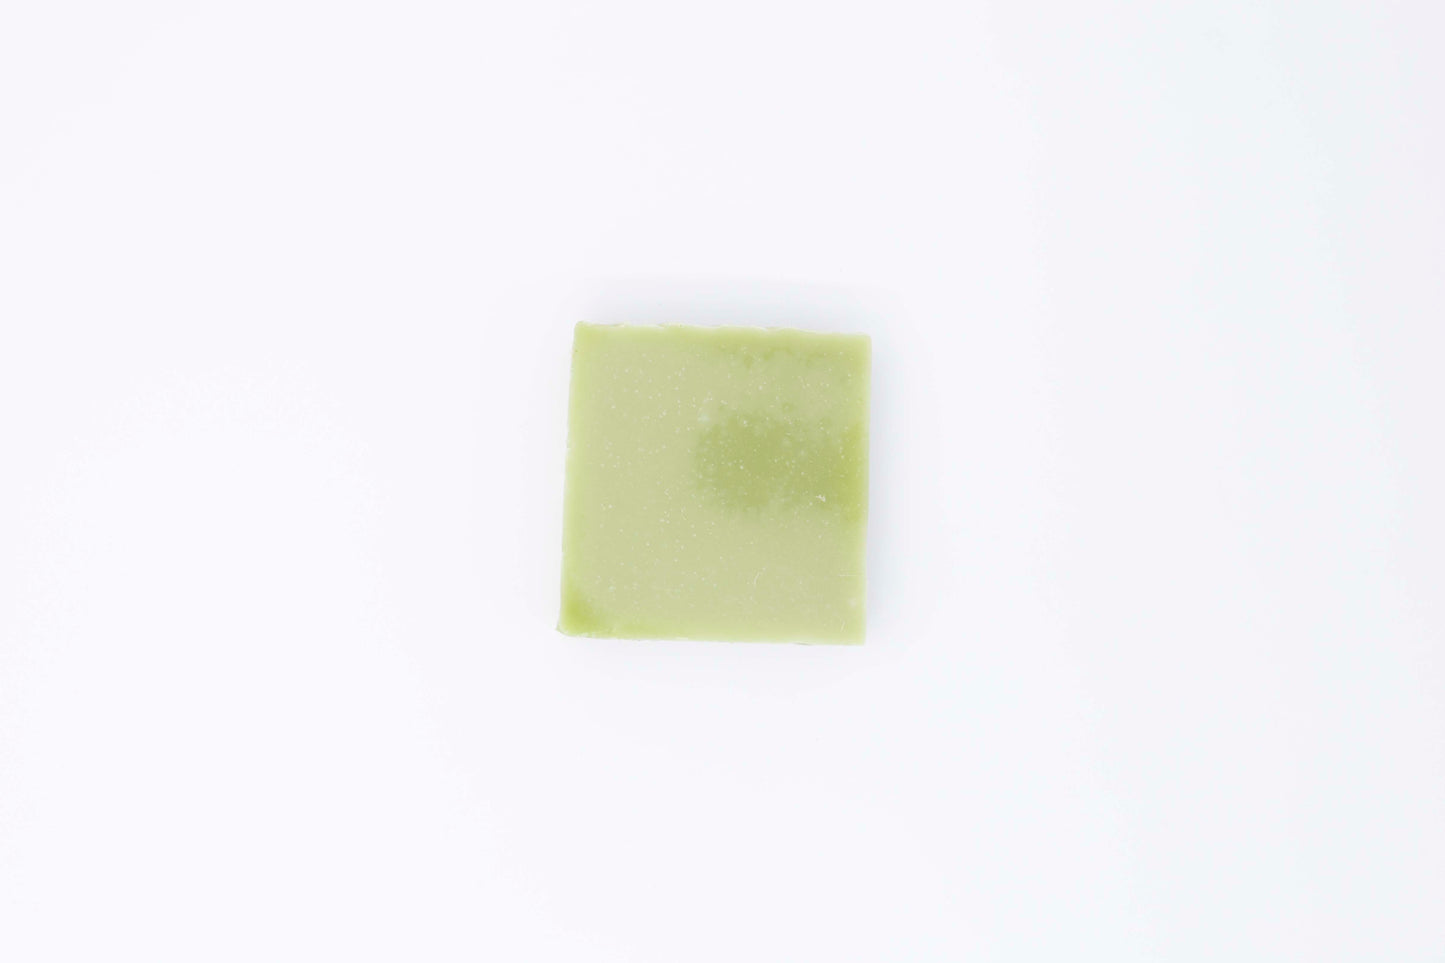 One bright fresh vibrant green bergamot pine soap bar sits on a clean white background